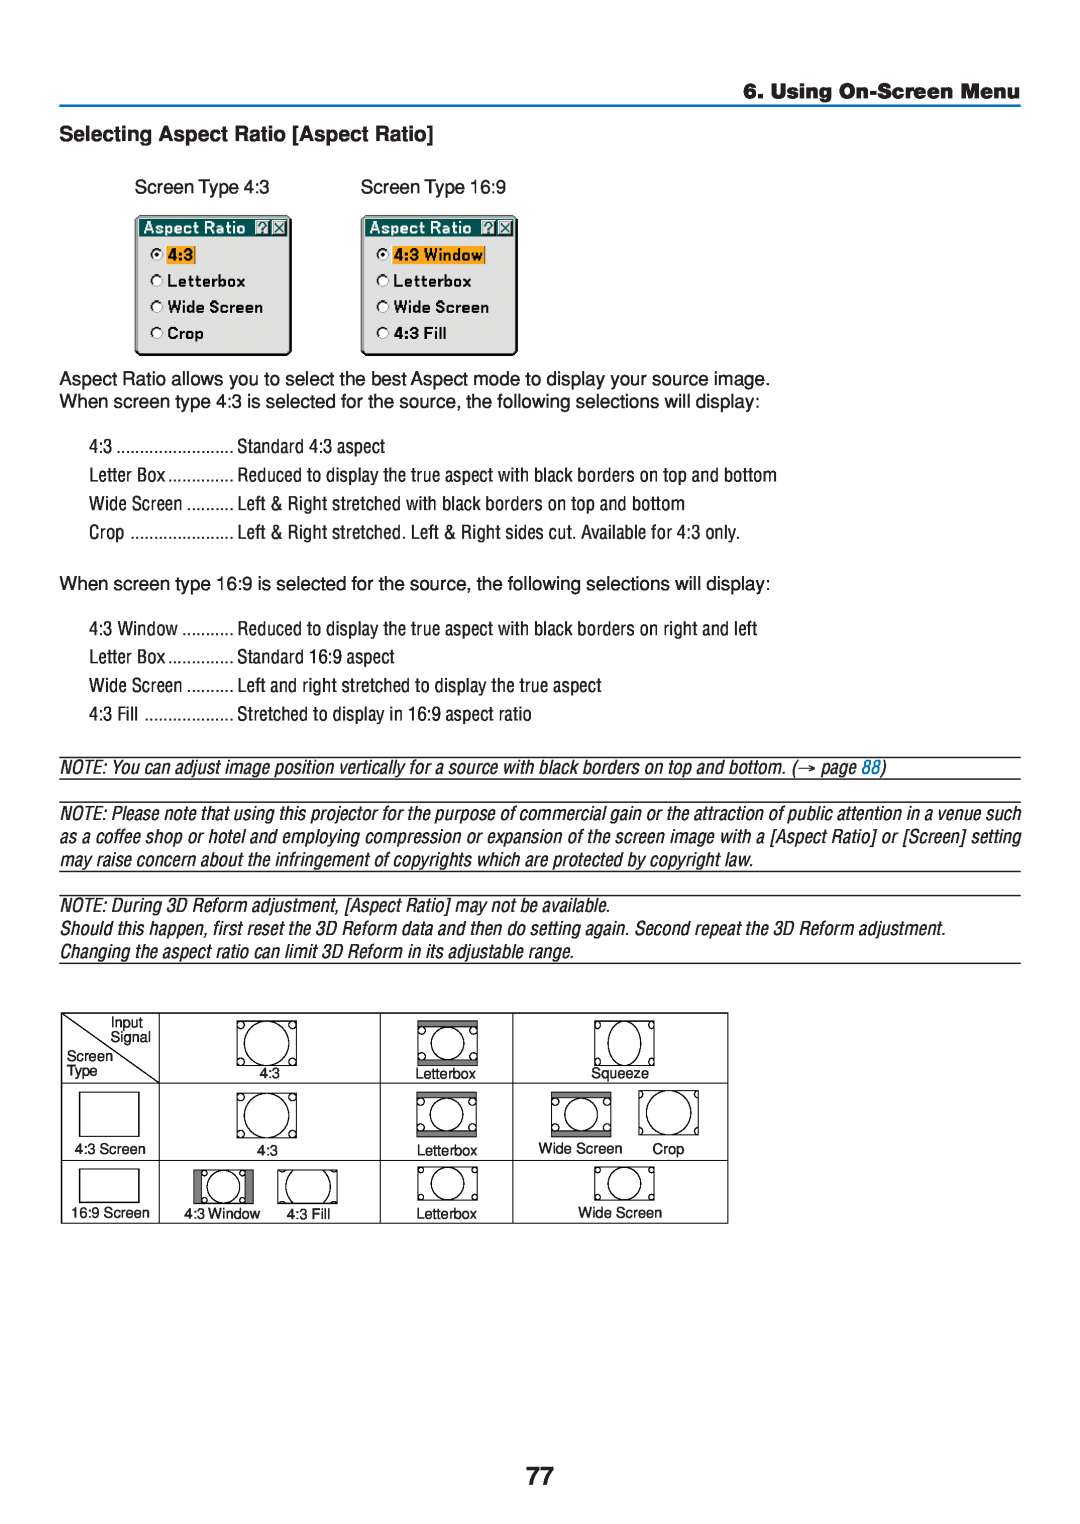 Dukane 8808 user manual Selecting Aspect Ratio Aspect Ratio, Using On-Screen Menu, Screen Type, Standard 43 aspect 